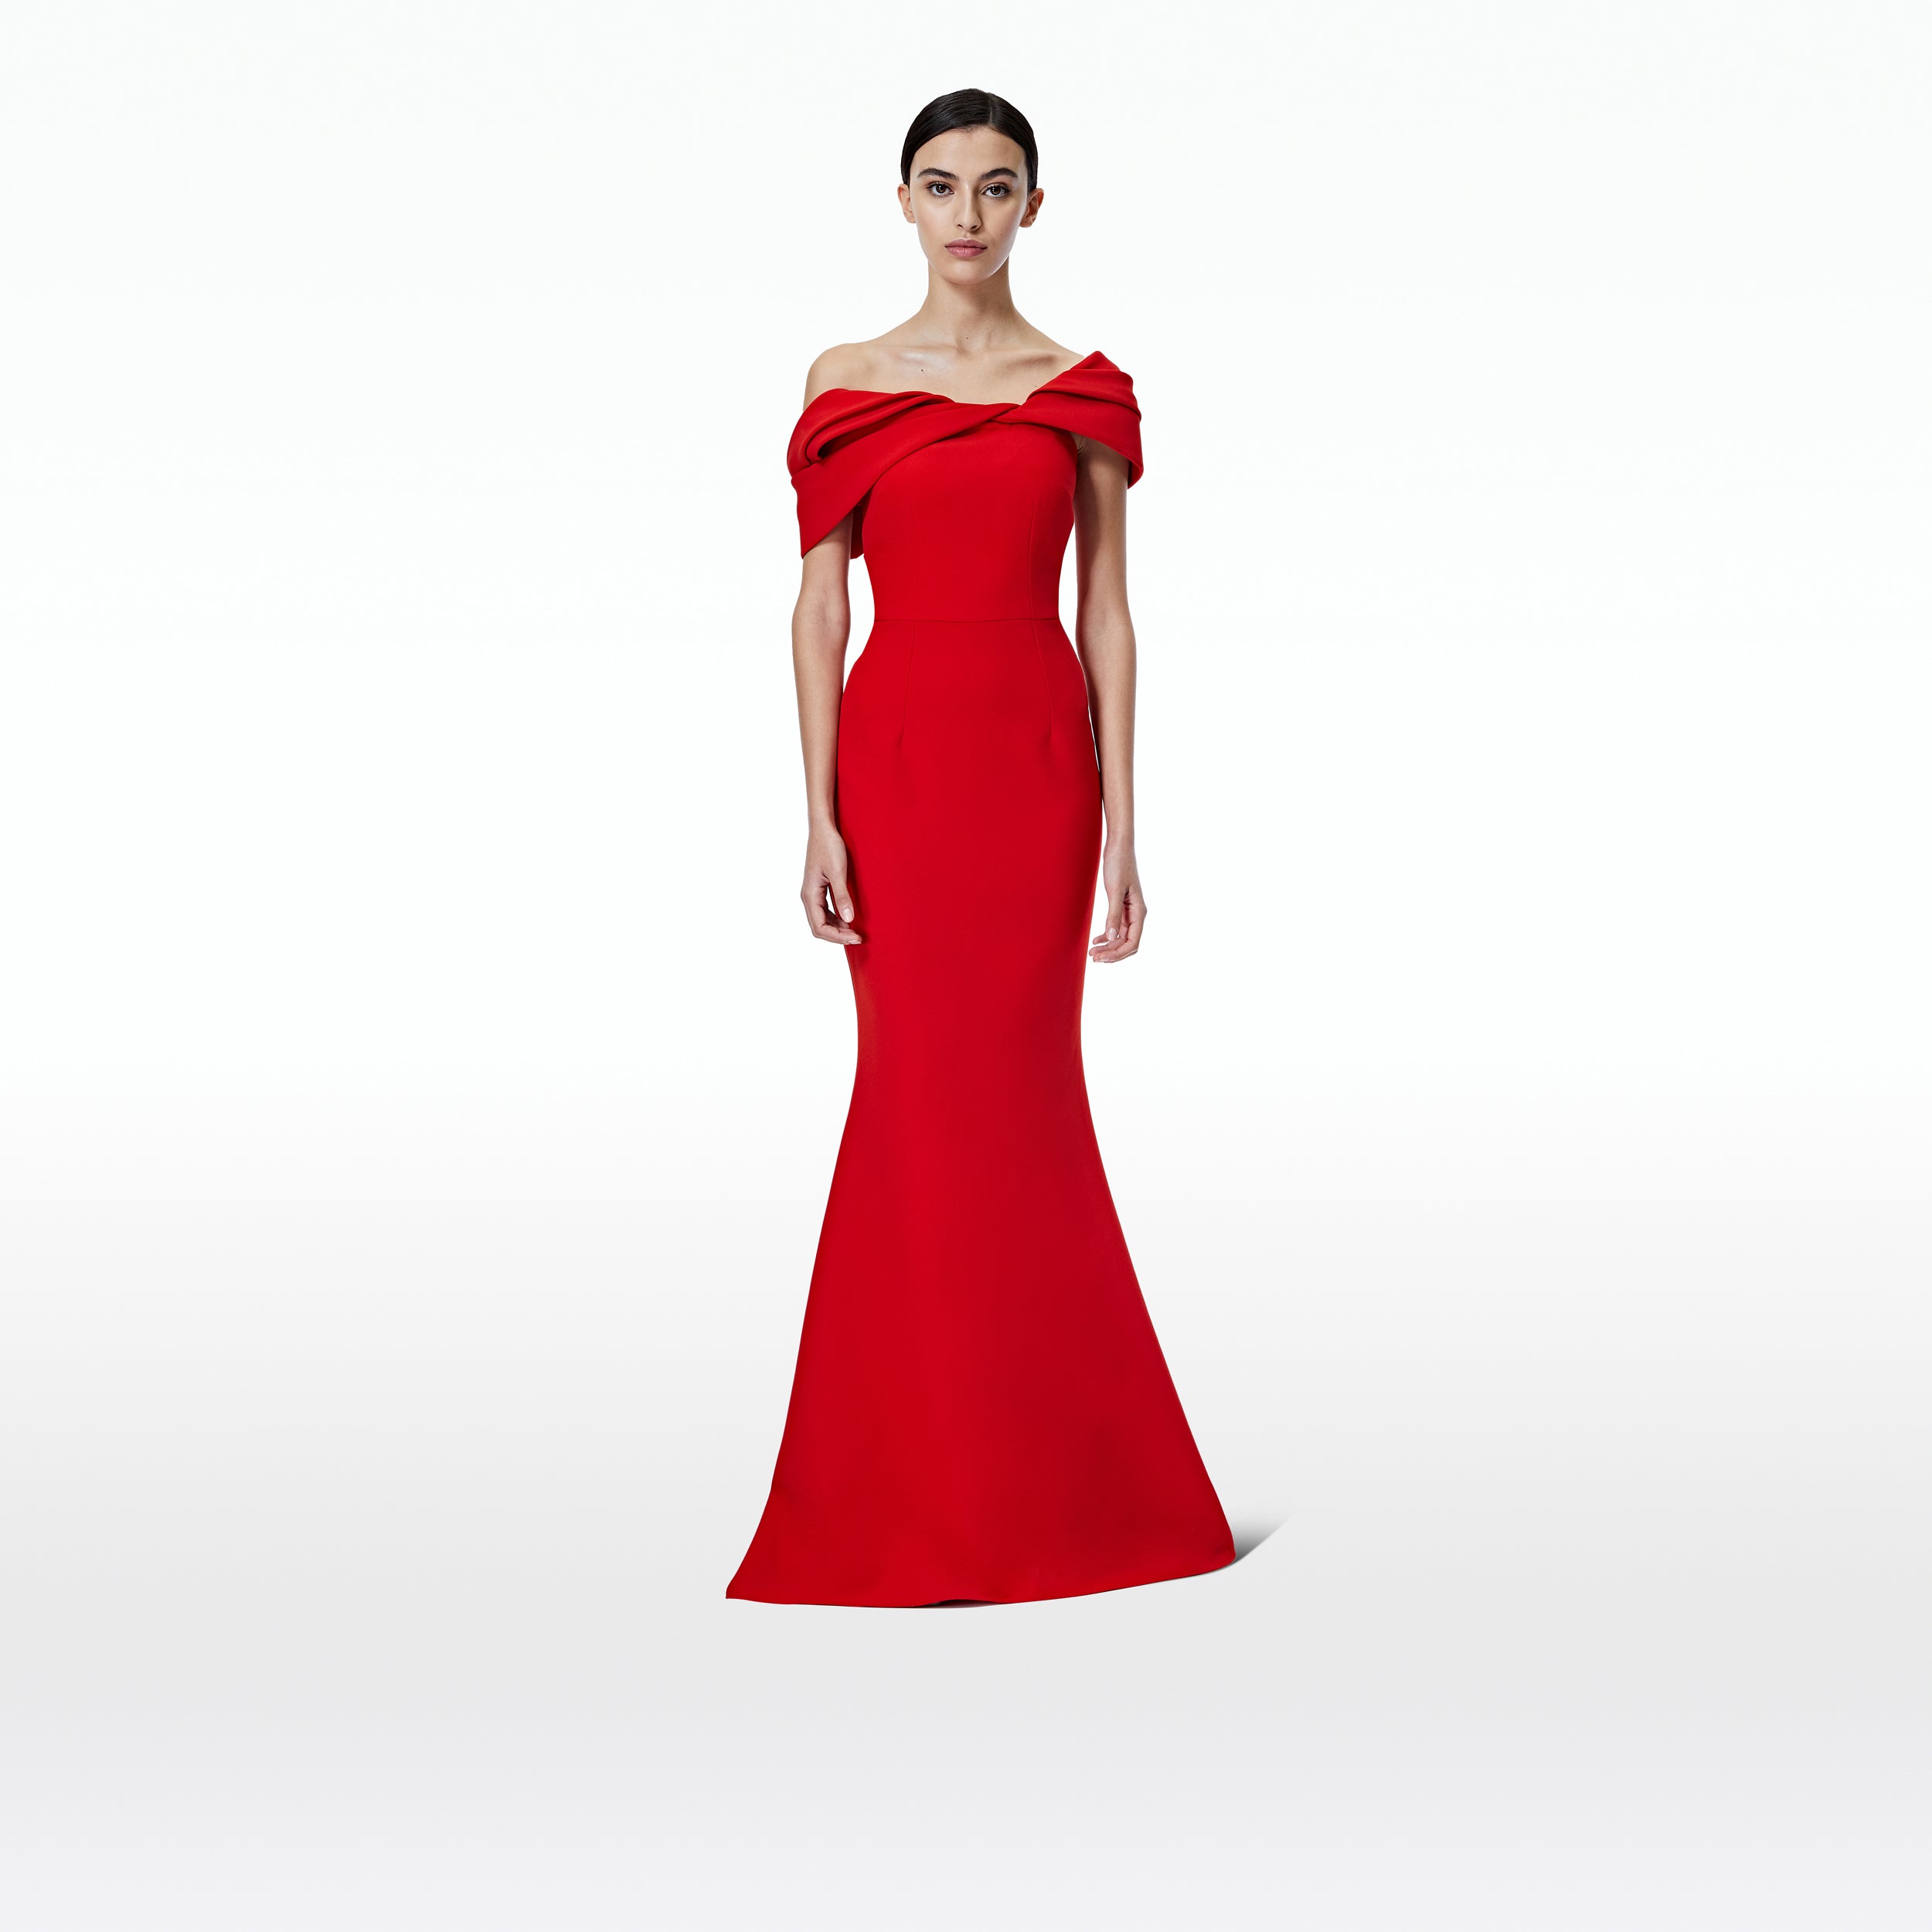 Rossa Dazzling Red Long Dress FR36 - US4 - UK8